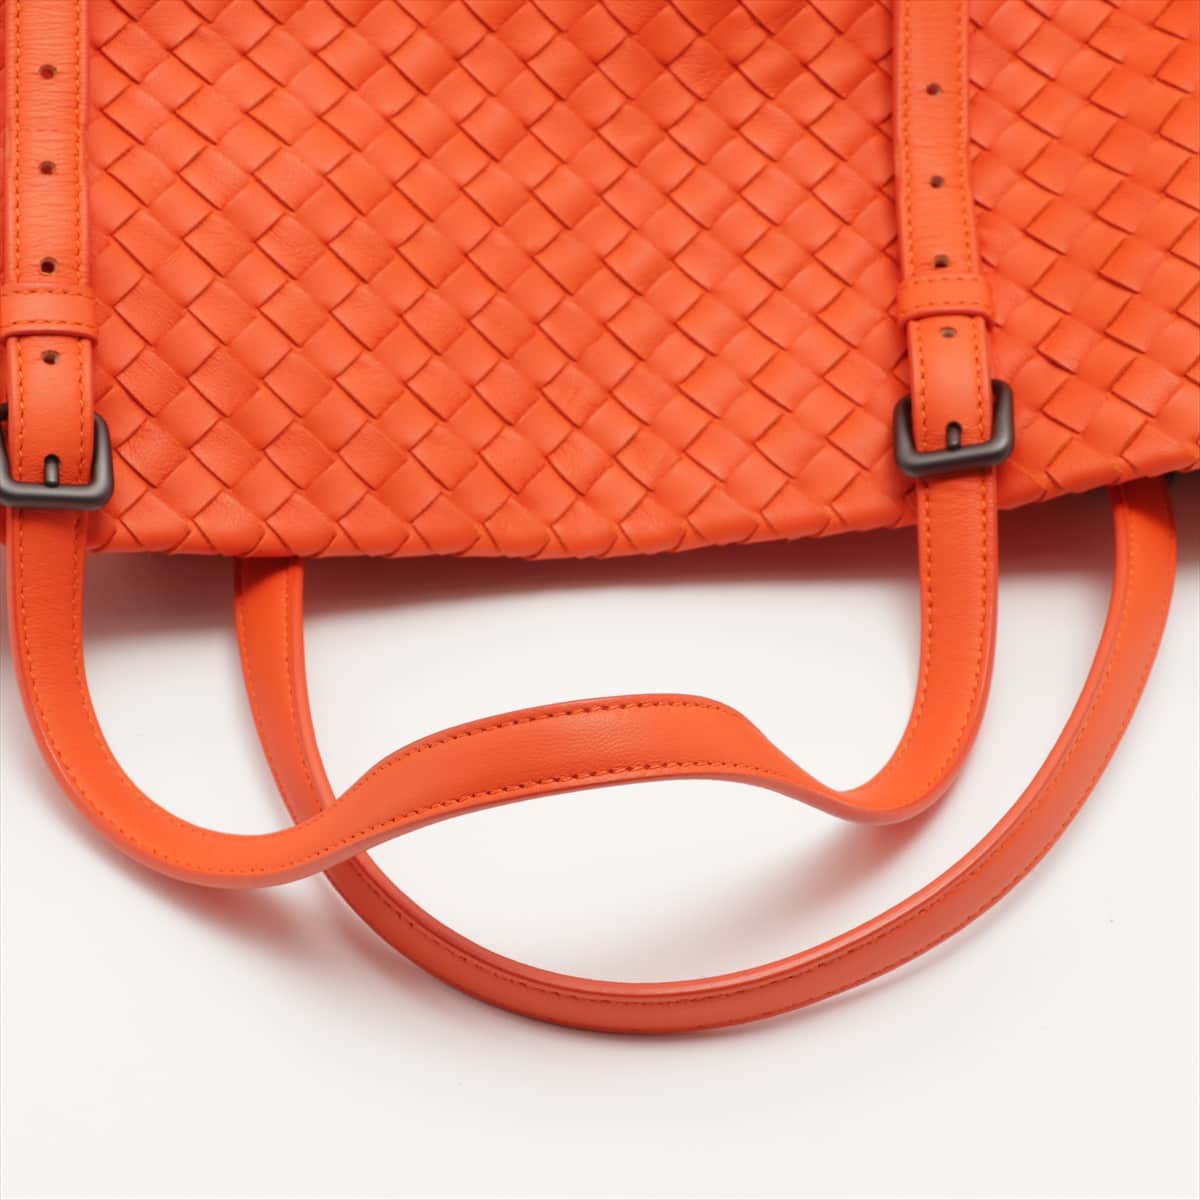 Bottega Veneta Intrecciato Cesta Leather Tote bag Orange With mirror